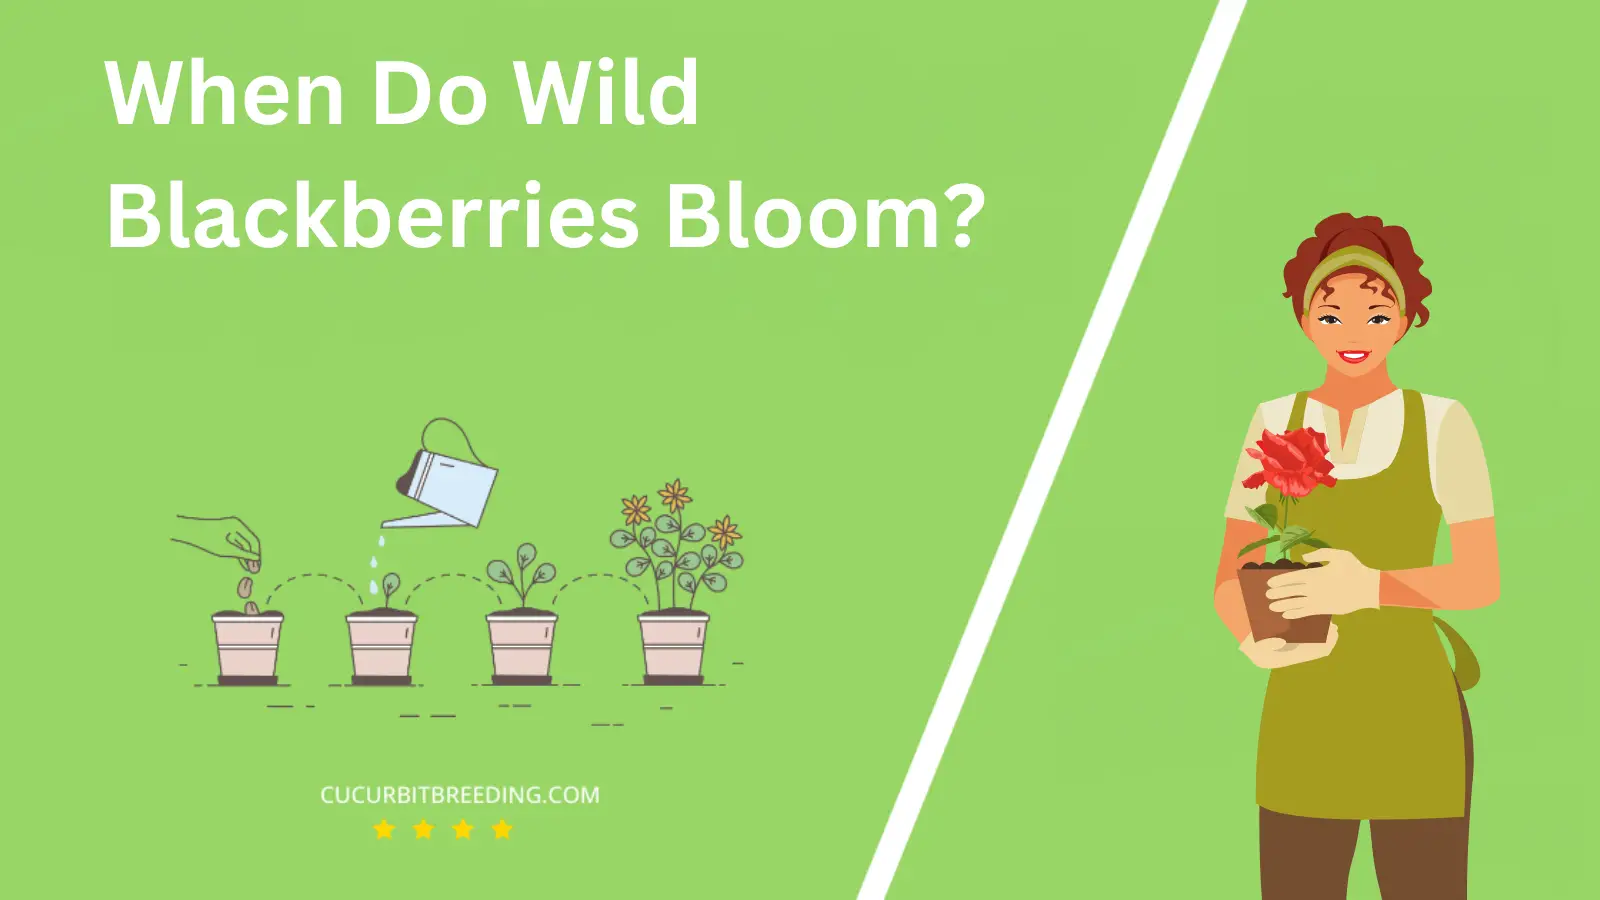 When Do Wild Blackberries Bloom?